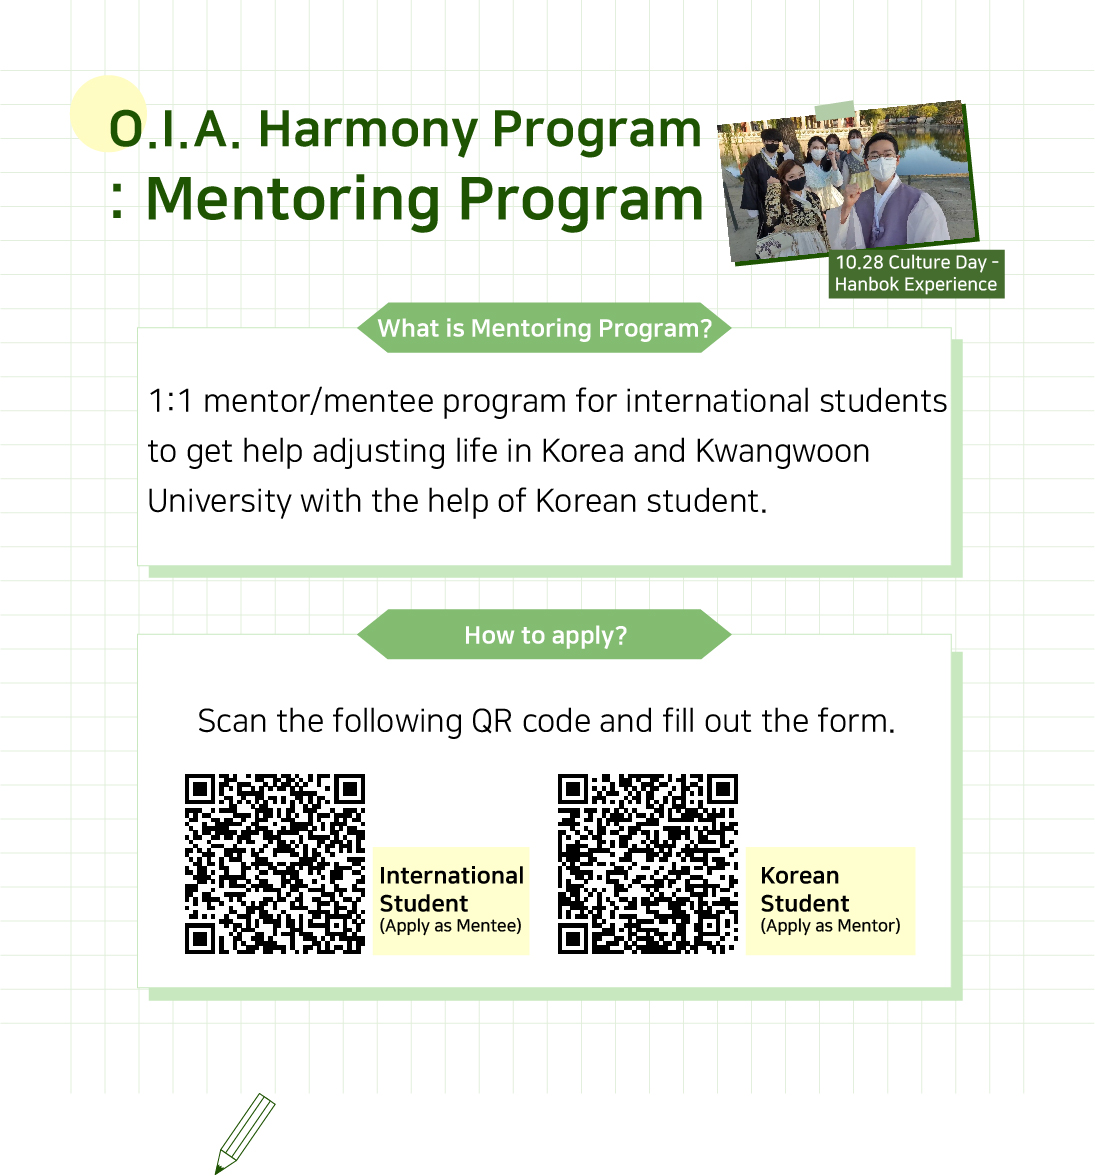 mentoring program